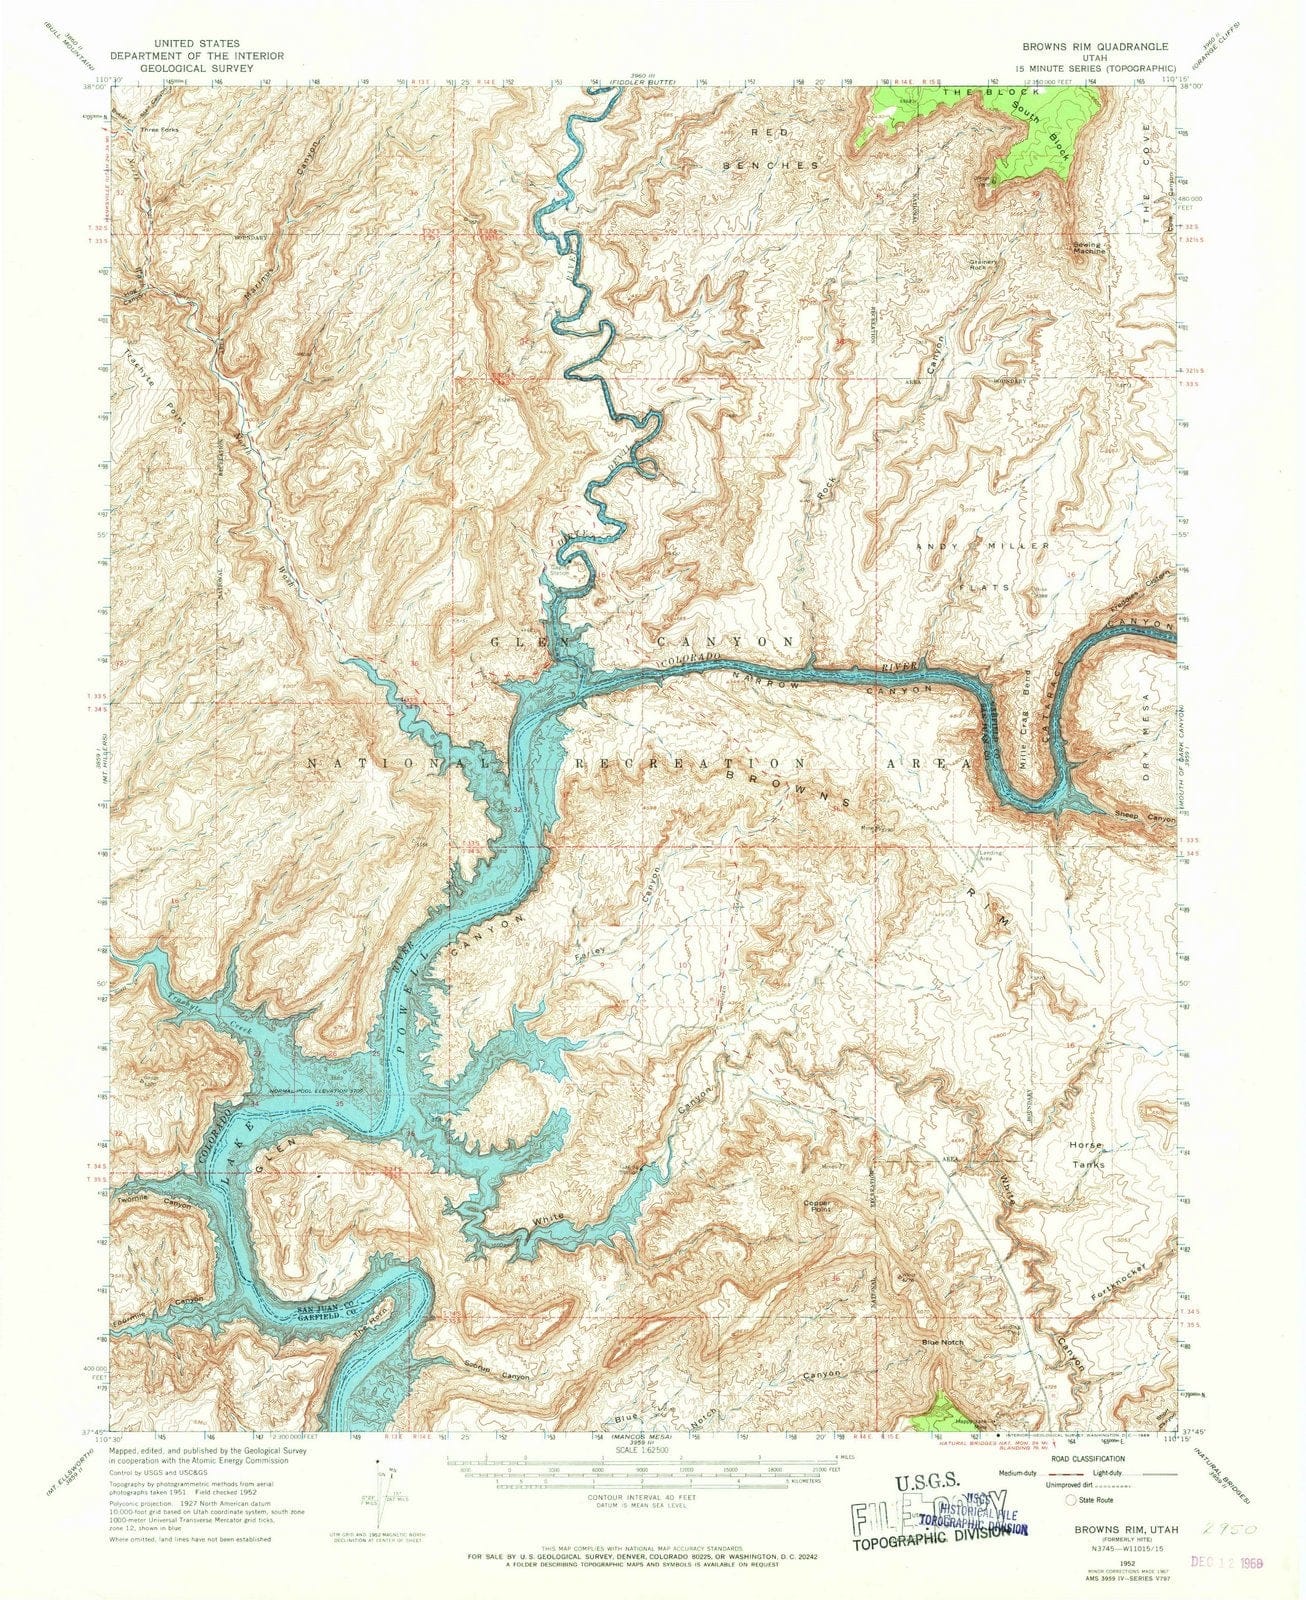 1952 Browns Rim, UT - Utah - USGS Topographic Map